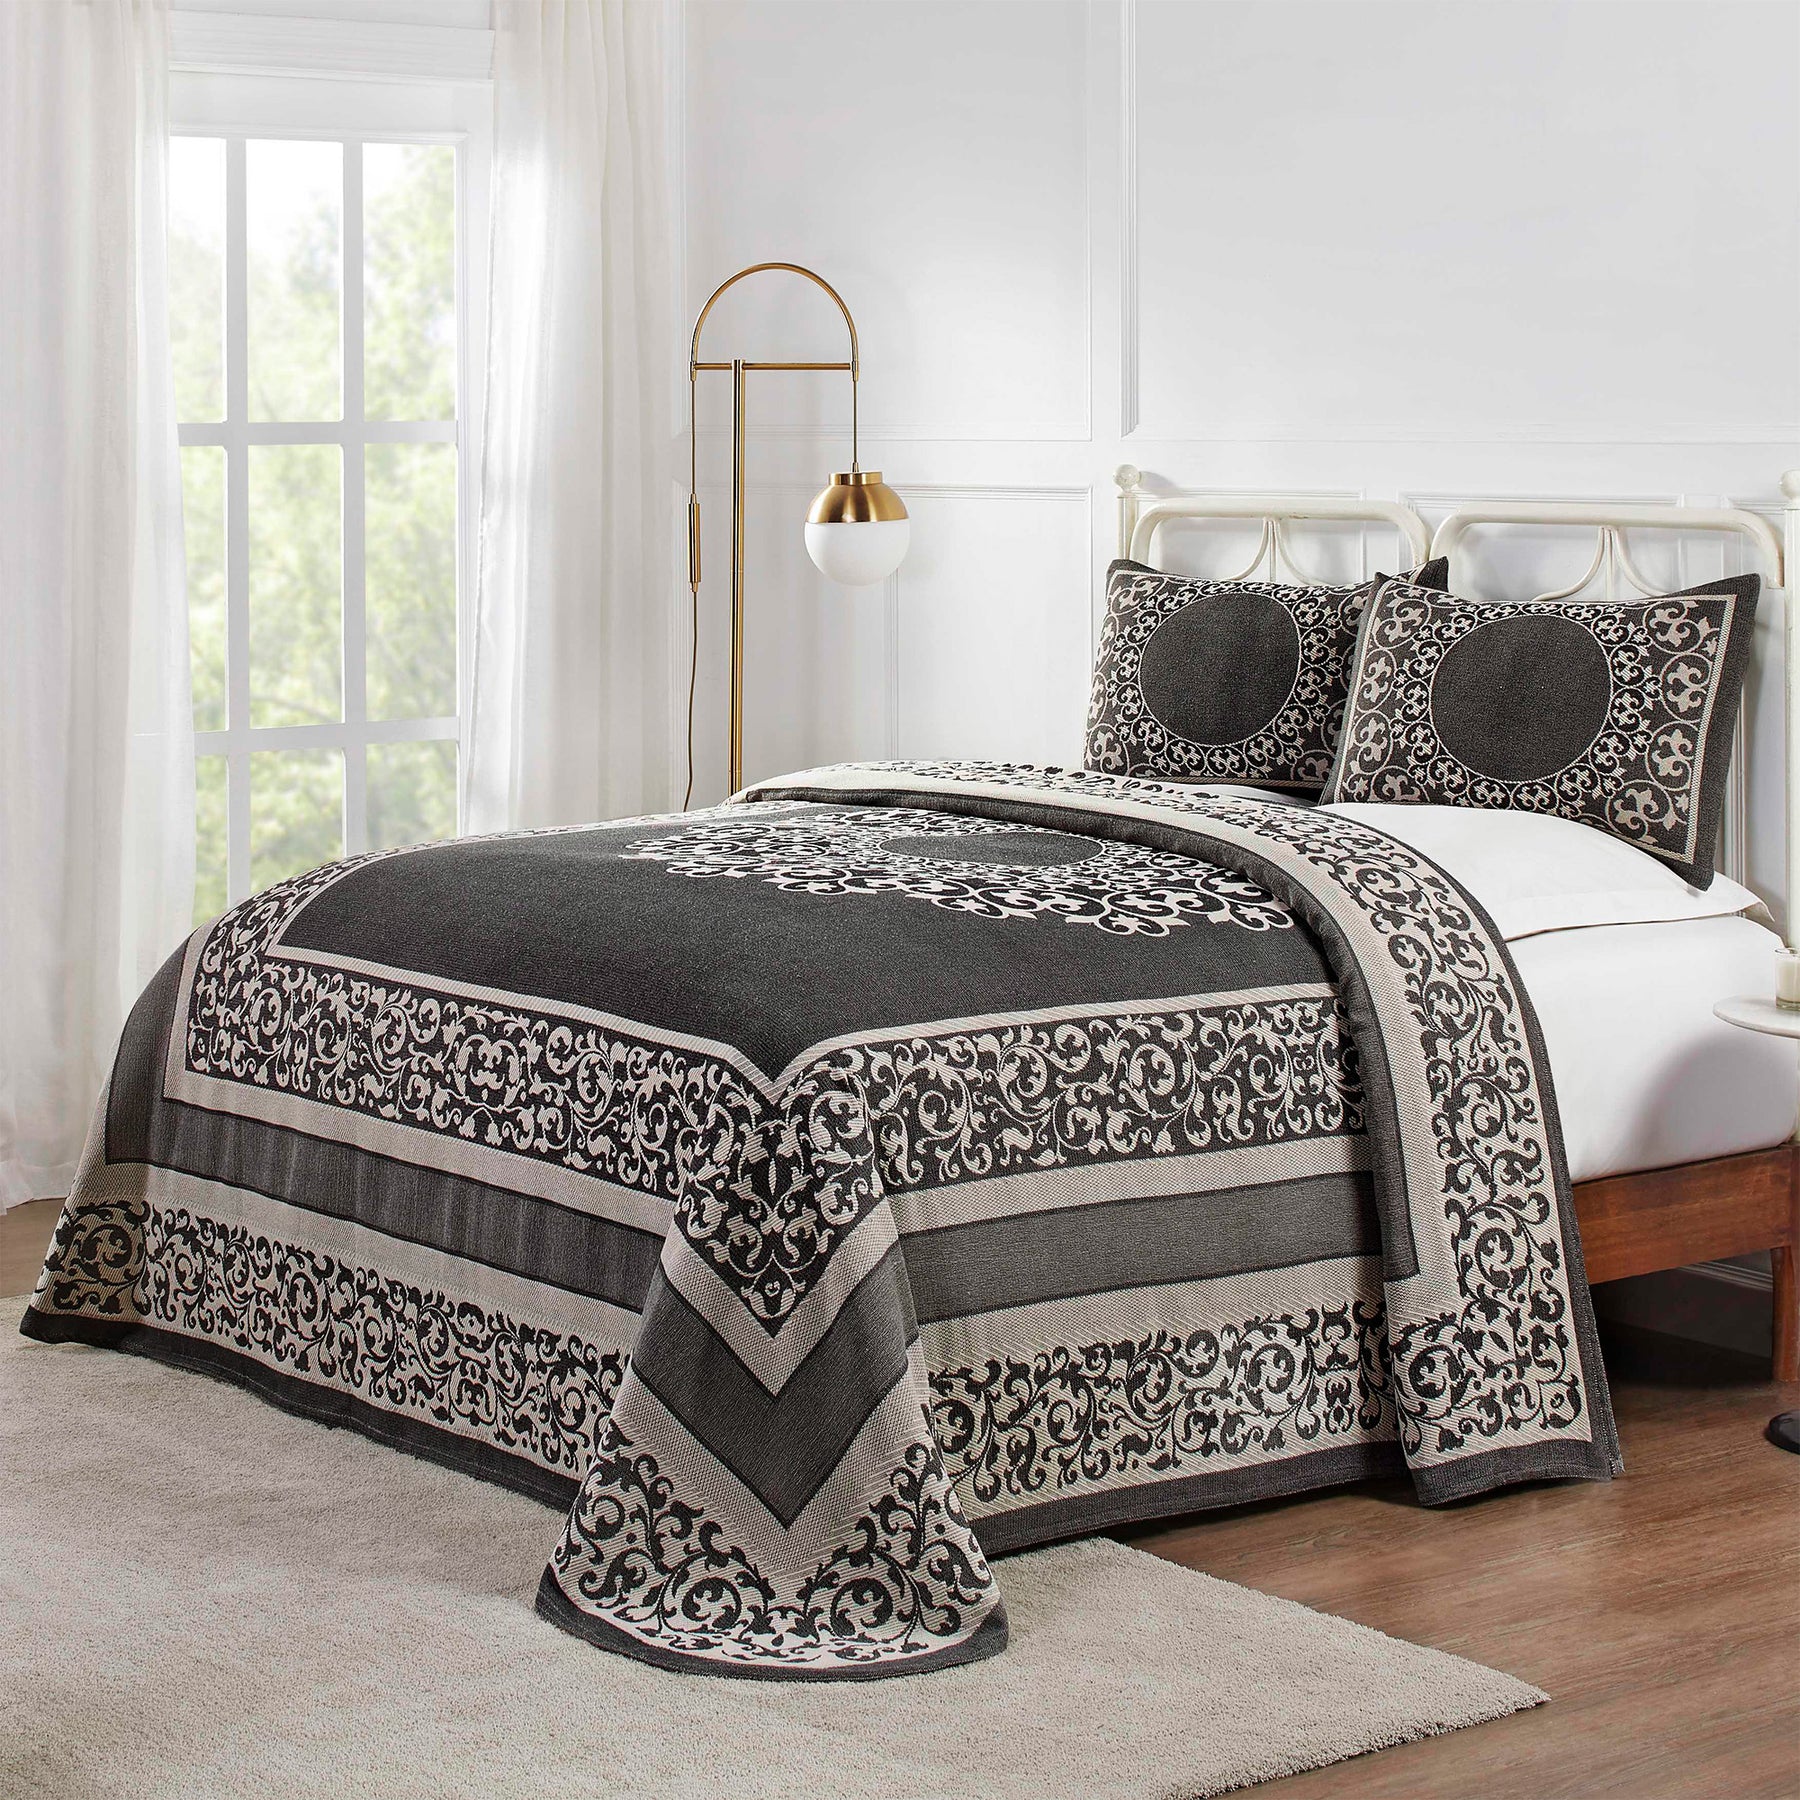 Superior Lyron Cotton Blend Woven Jacquard Vintage Floral Scroll Lightweight Bedspread and Sham Set  - Charcoal